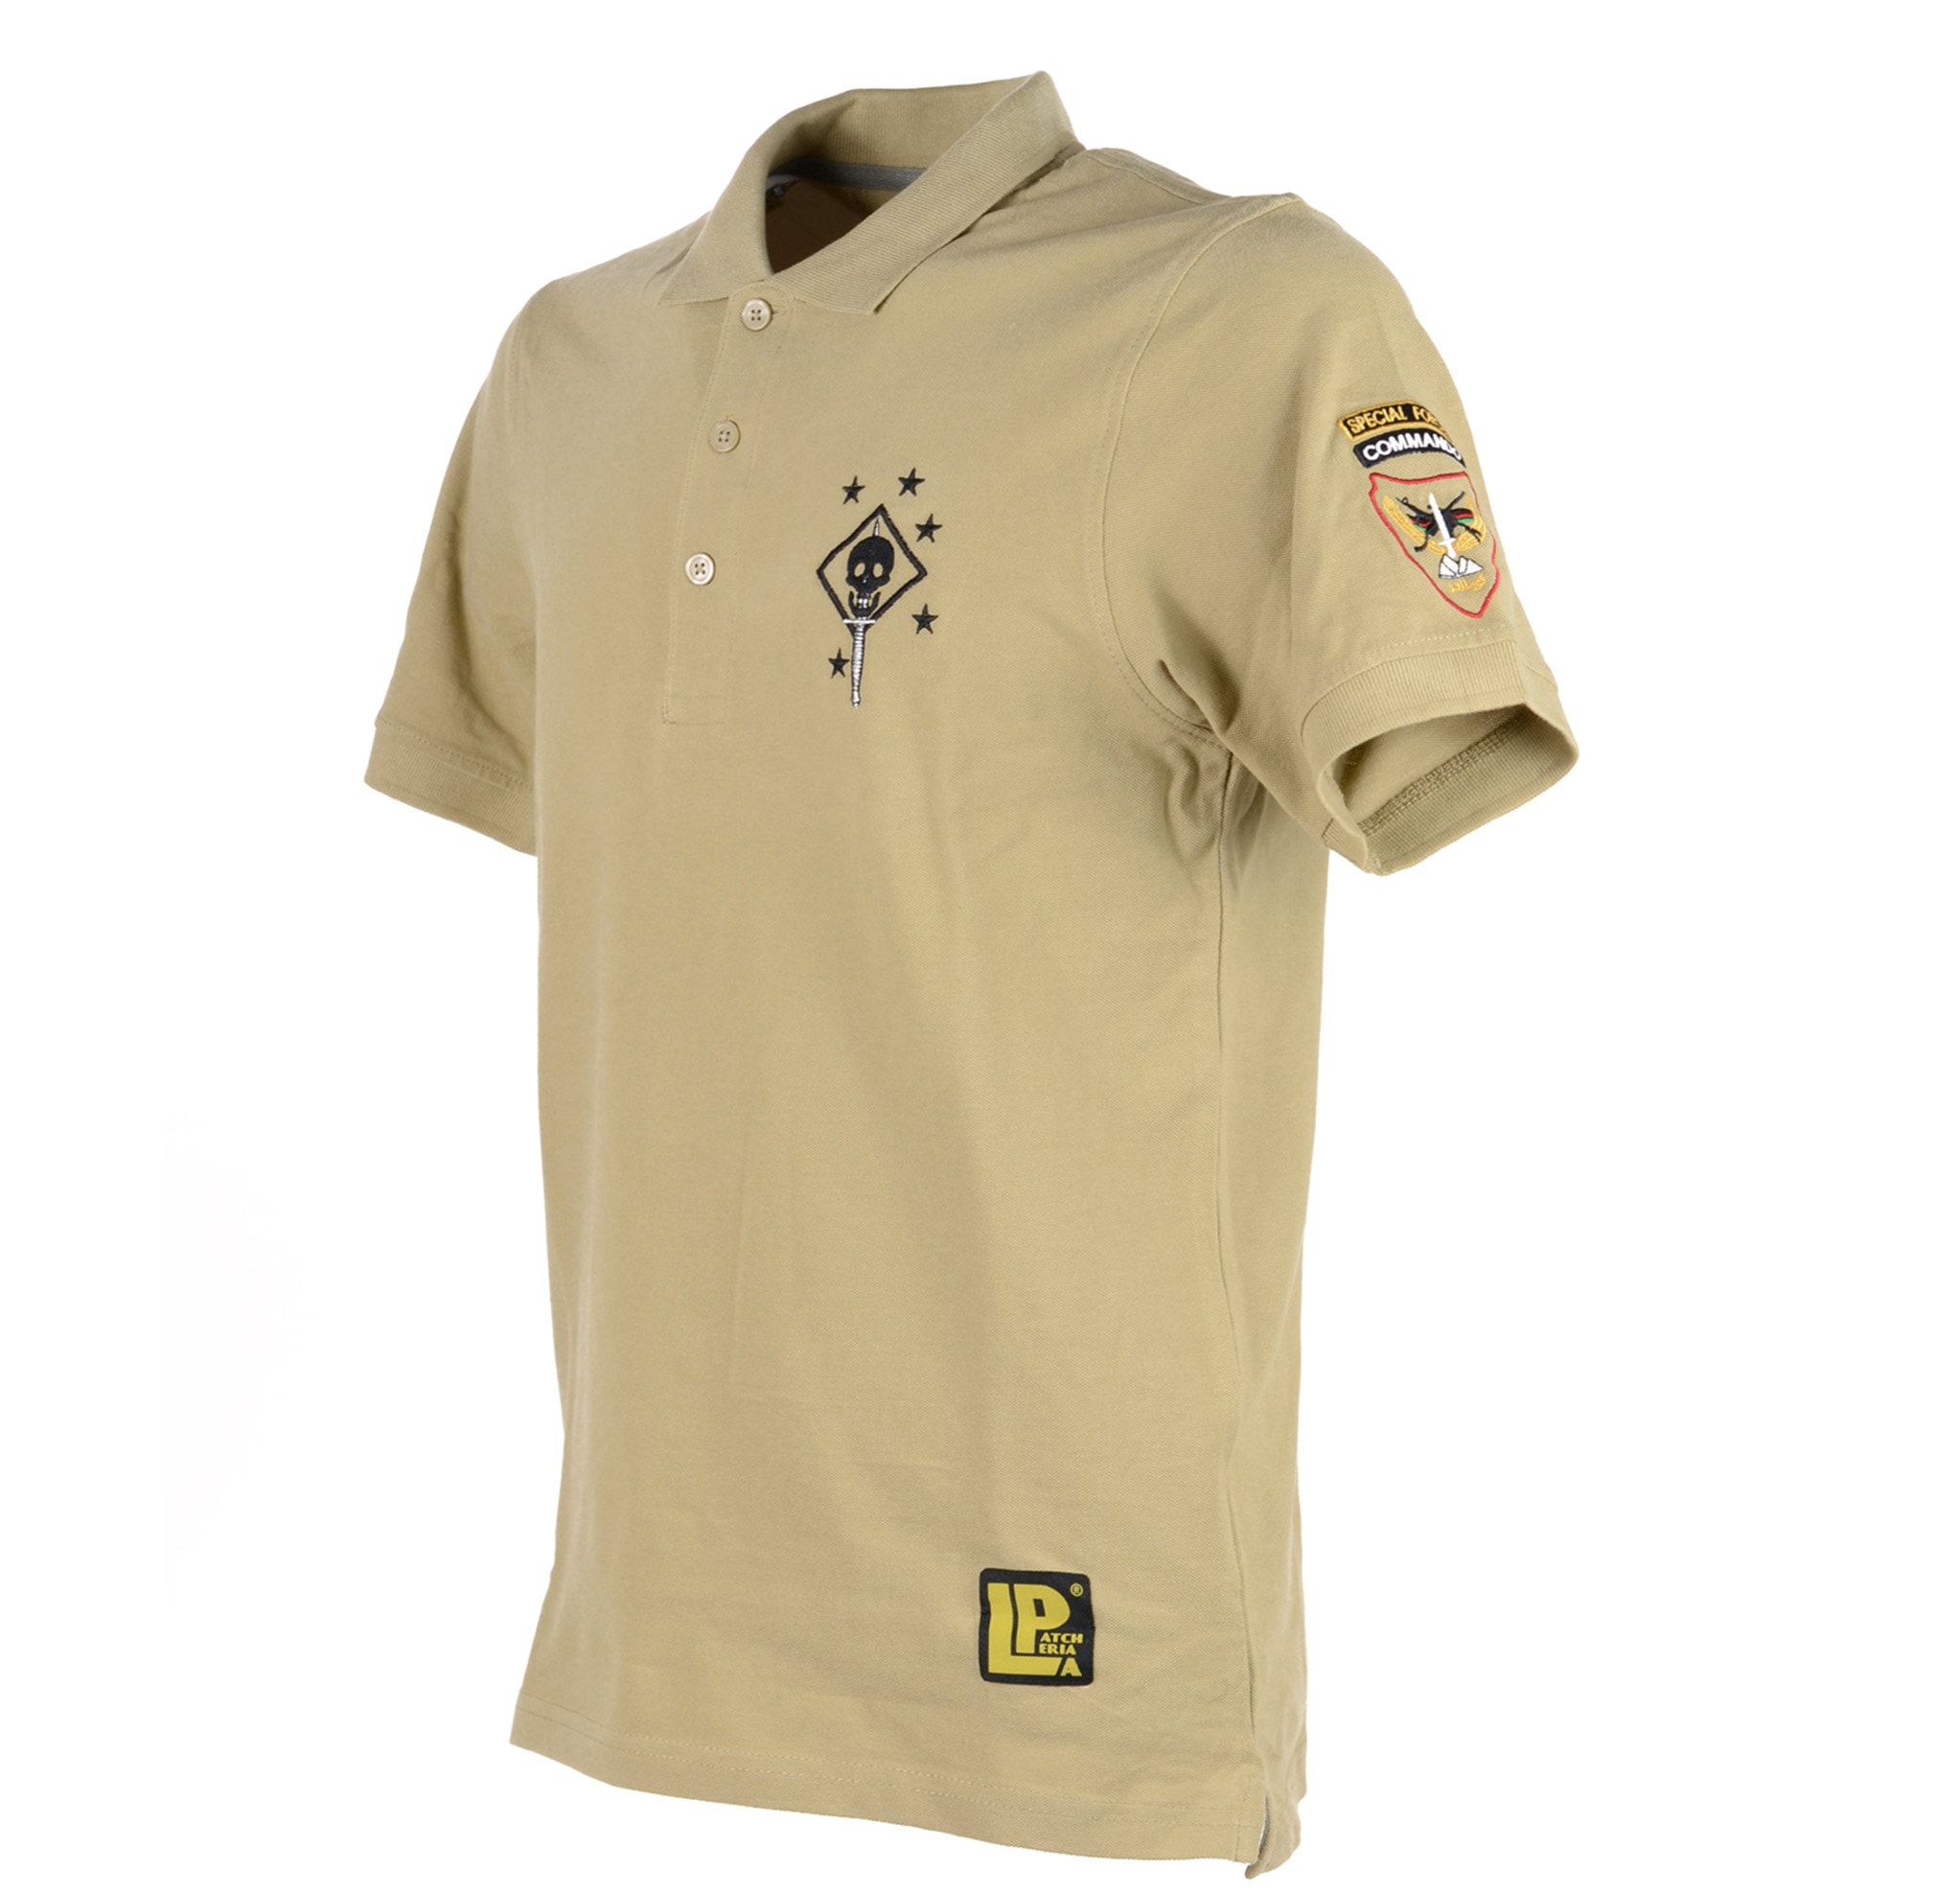 Purchase the La Patcheria Polo Shirt Marsoc Ana Commando SF tan